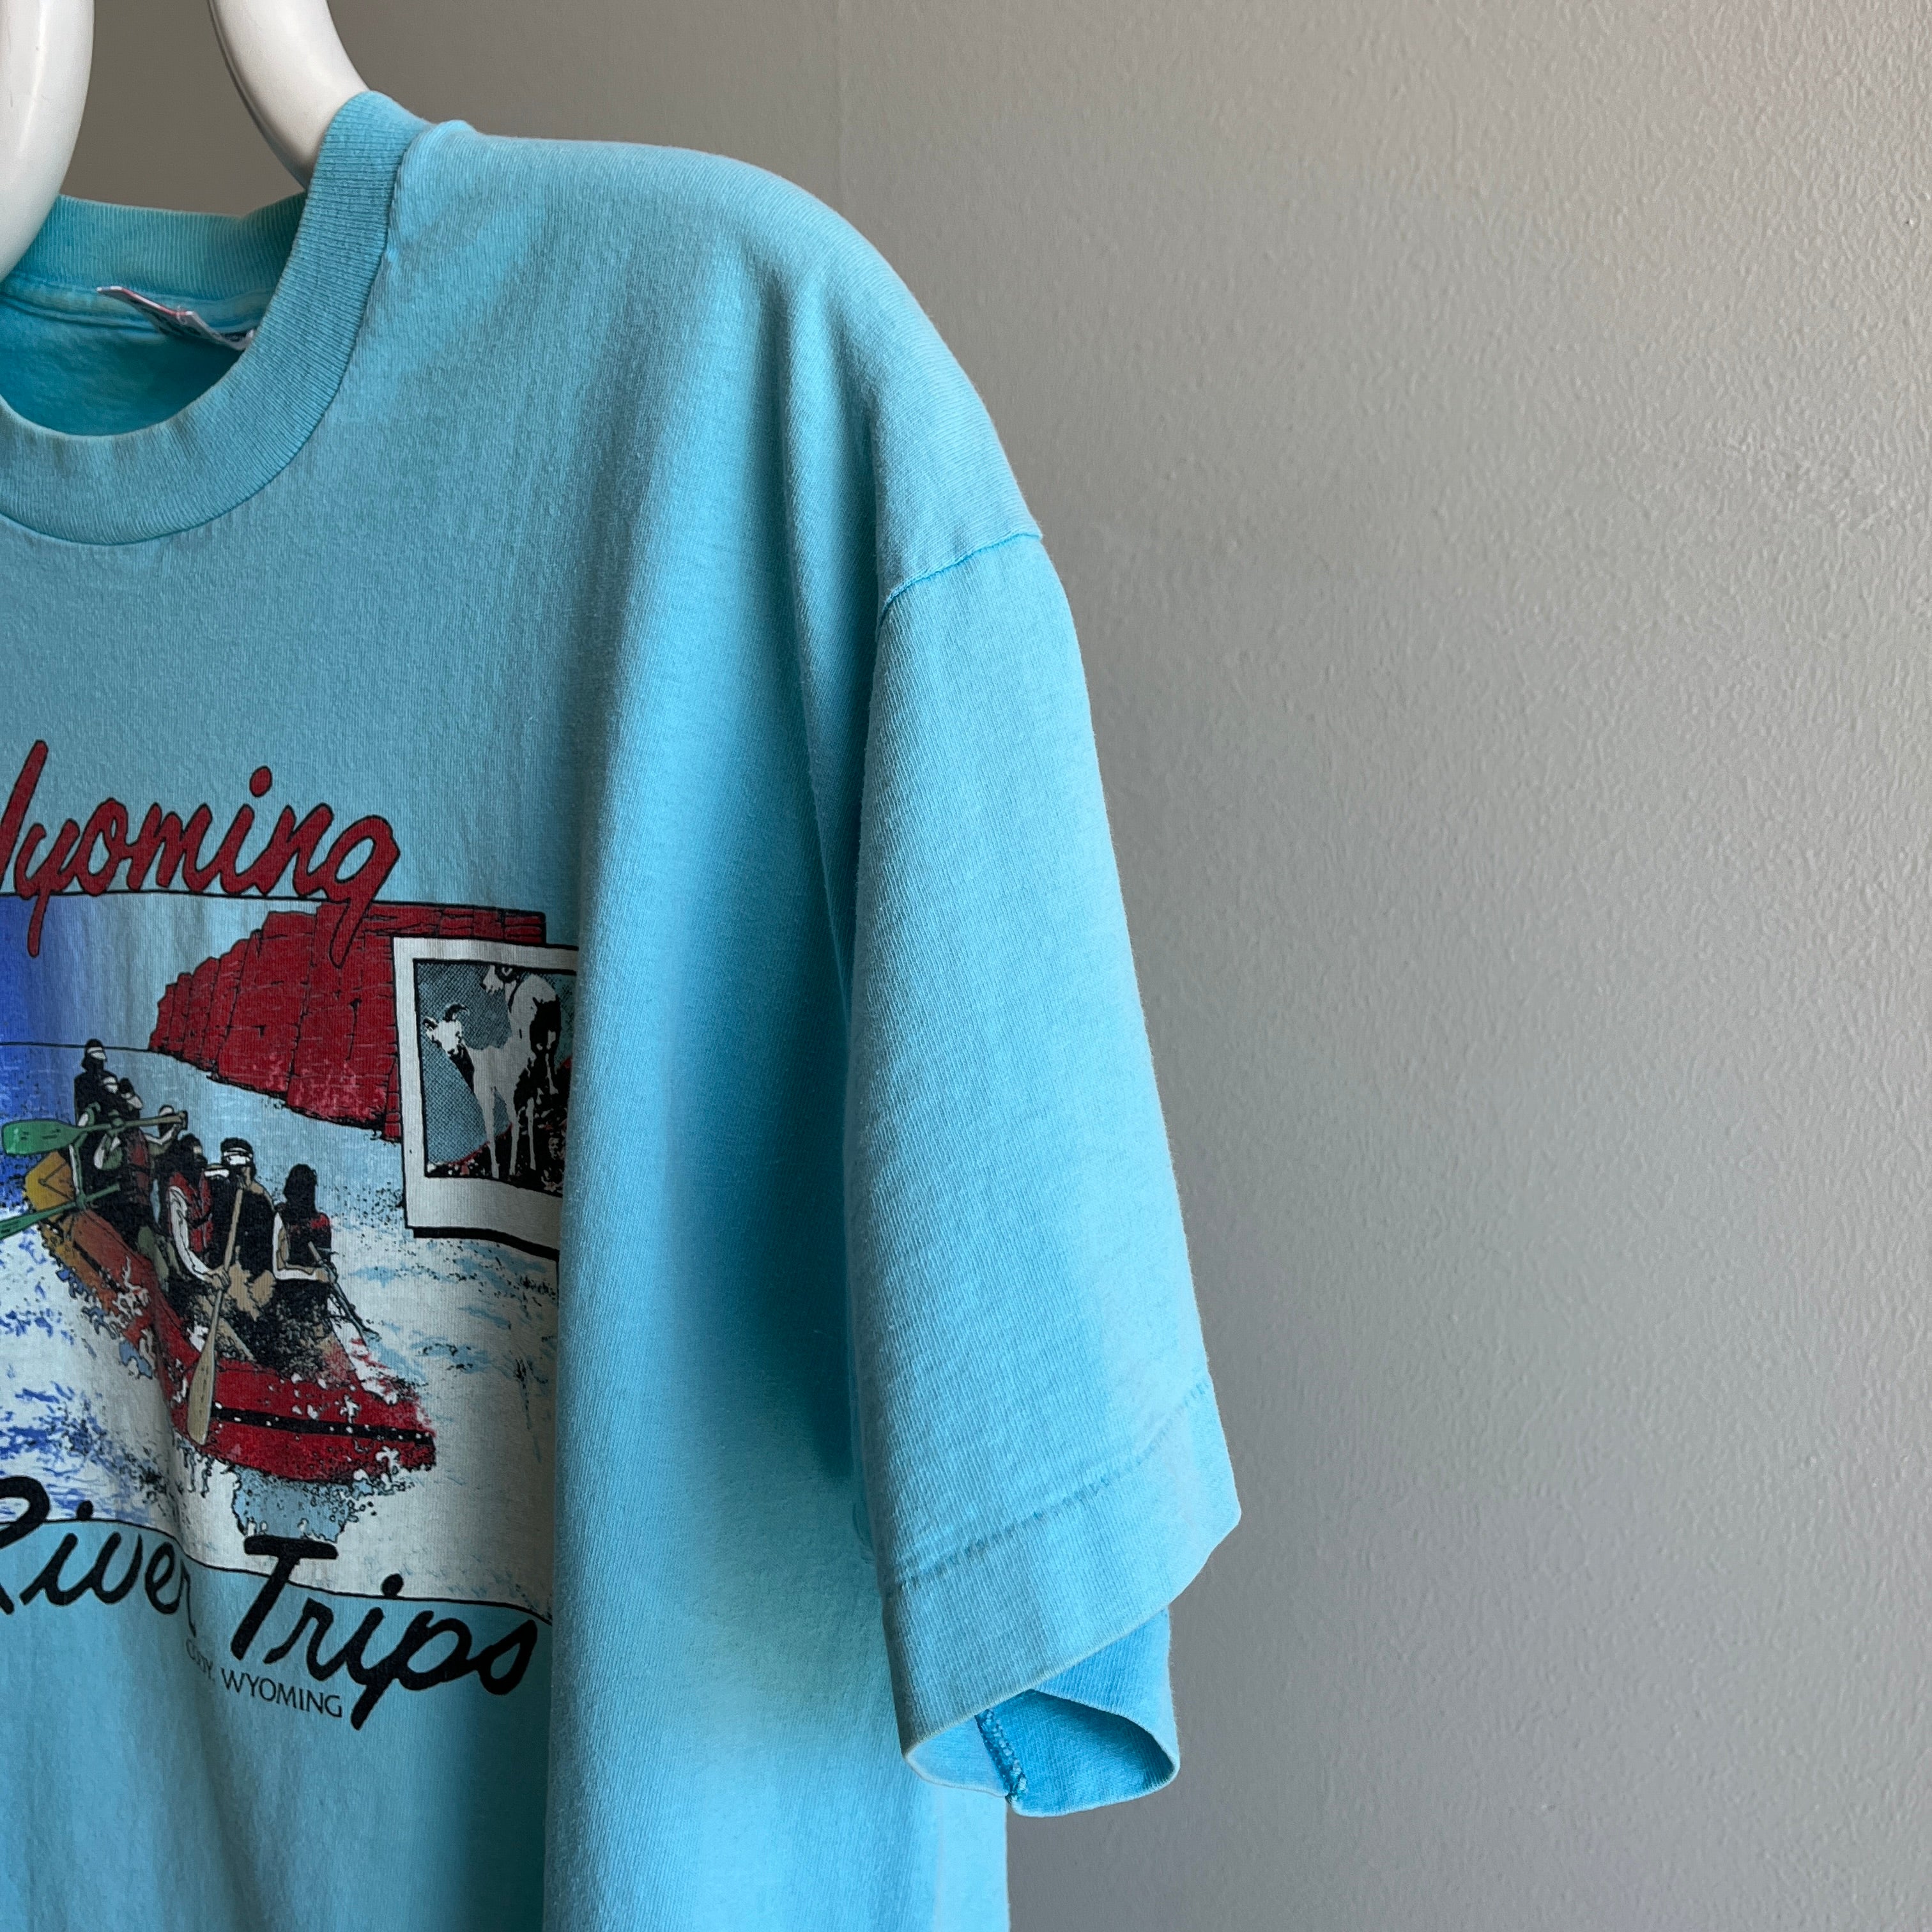 1980s Wyoming River Rafting Tourist T-Shirt